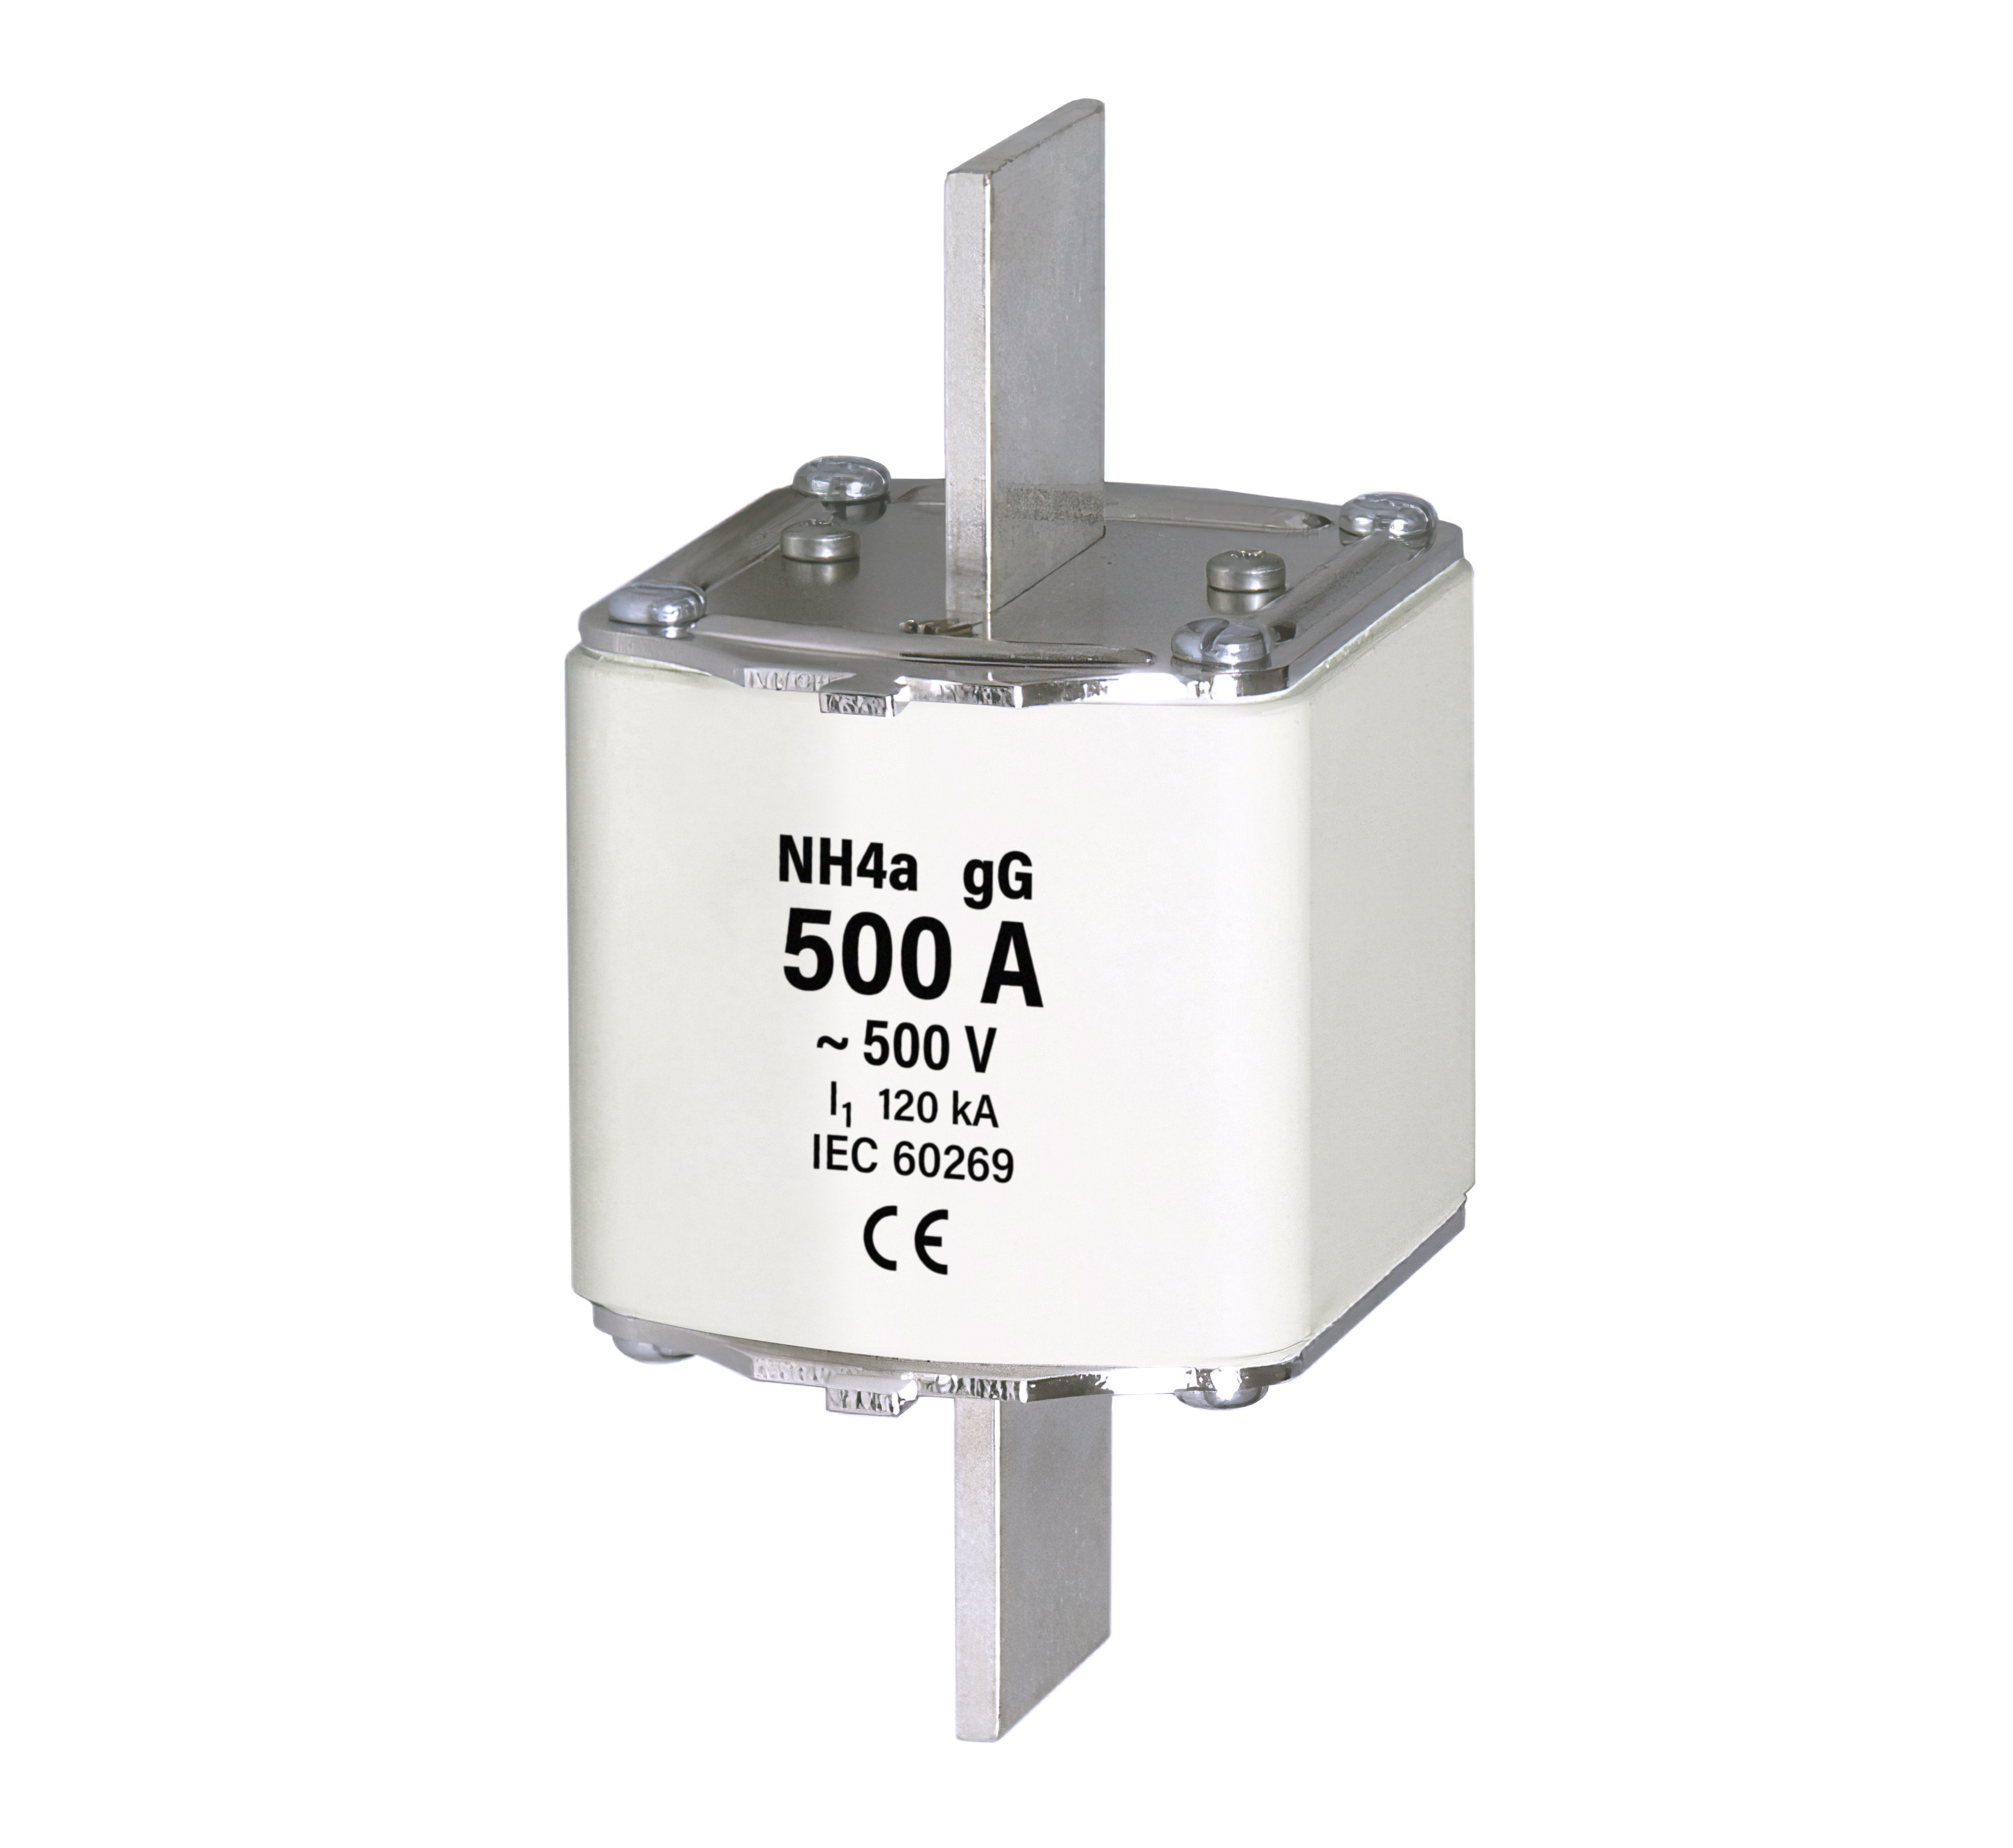 NH4a gG 500A/500V fuse link